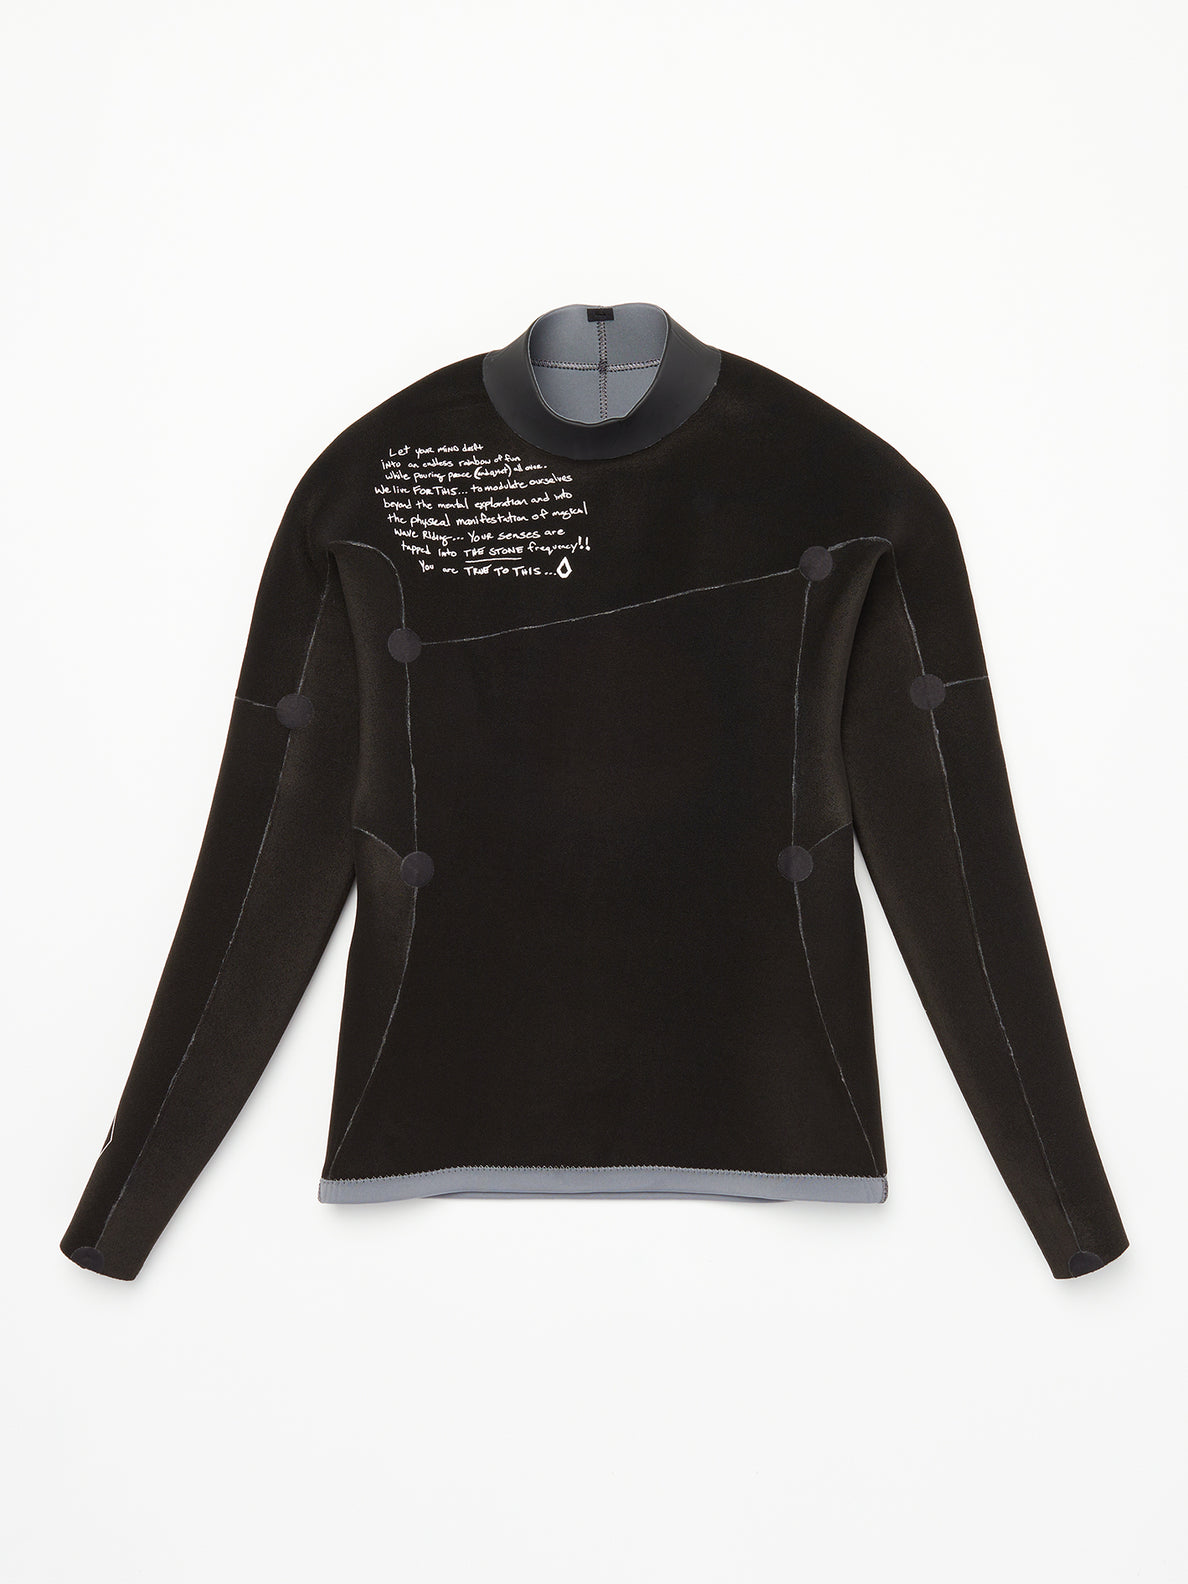 Boys Youth Modulator 2mm Long Sleeve Jacket Wetsuit - Charcoal (C9612330_CHR) [7]